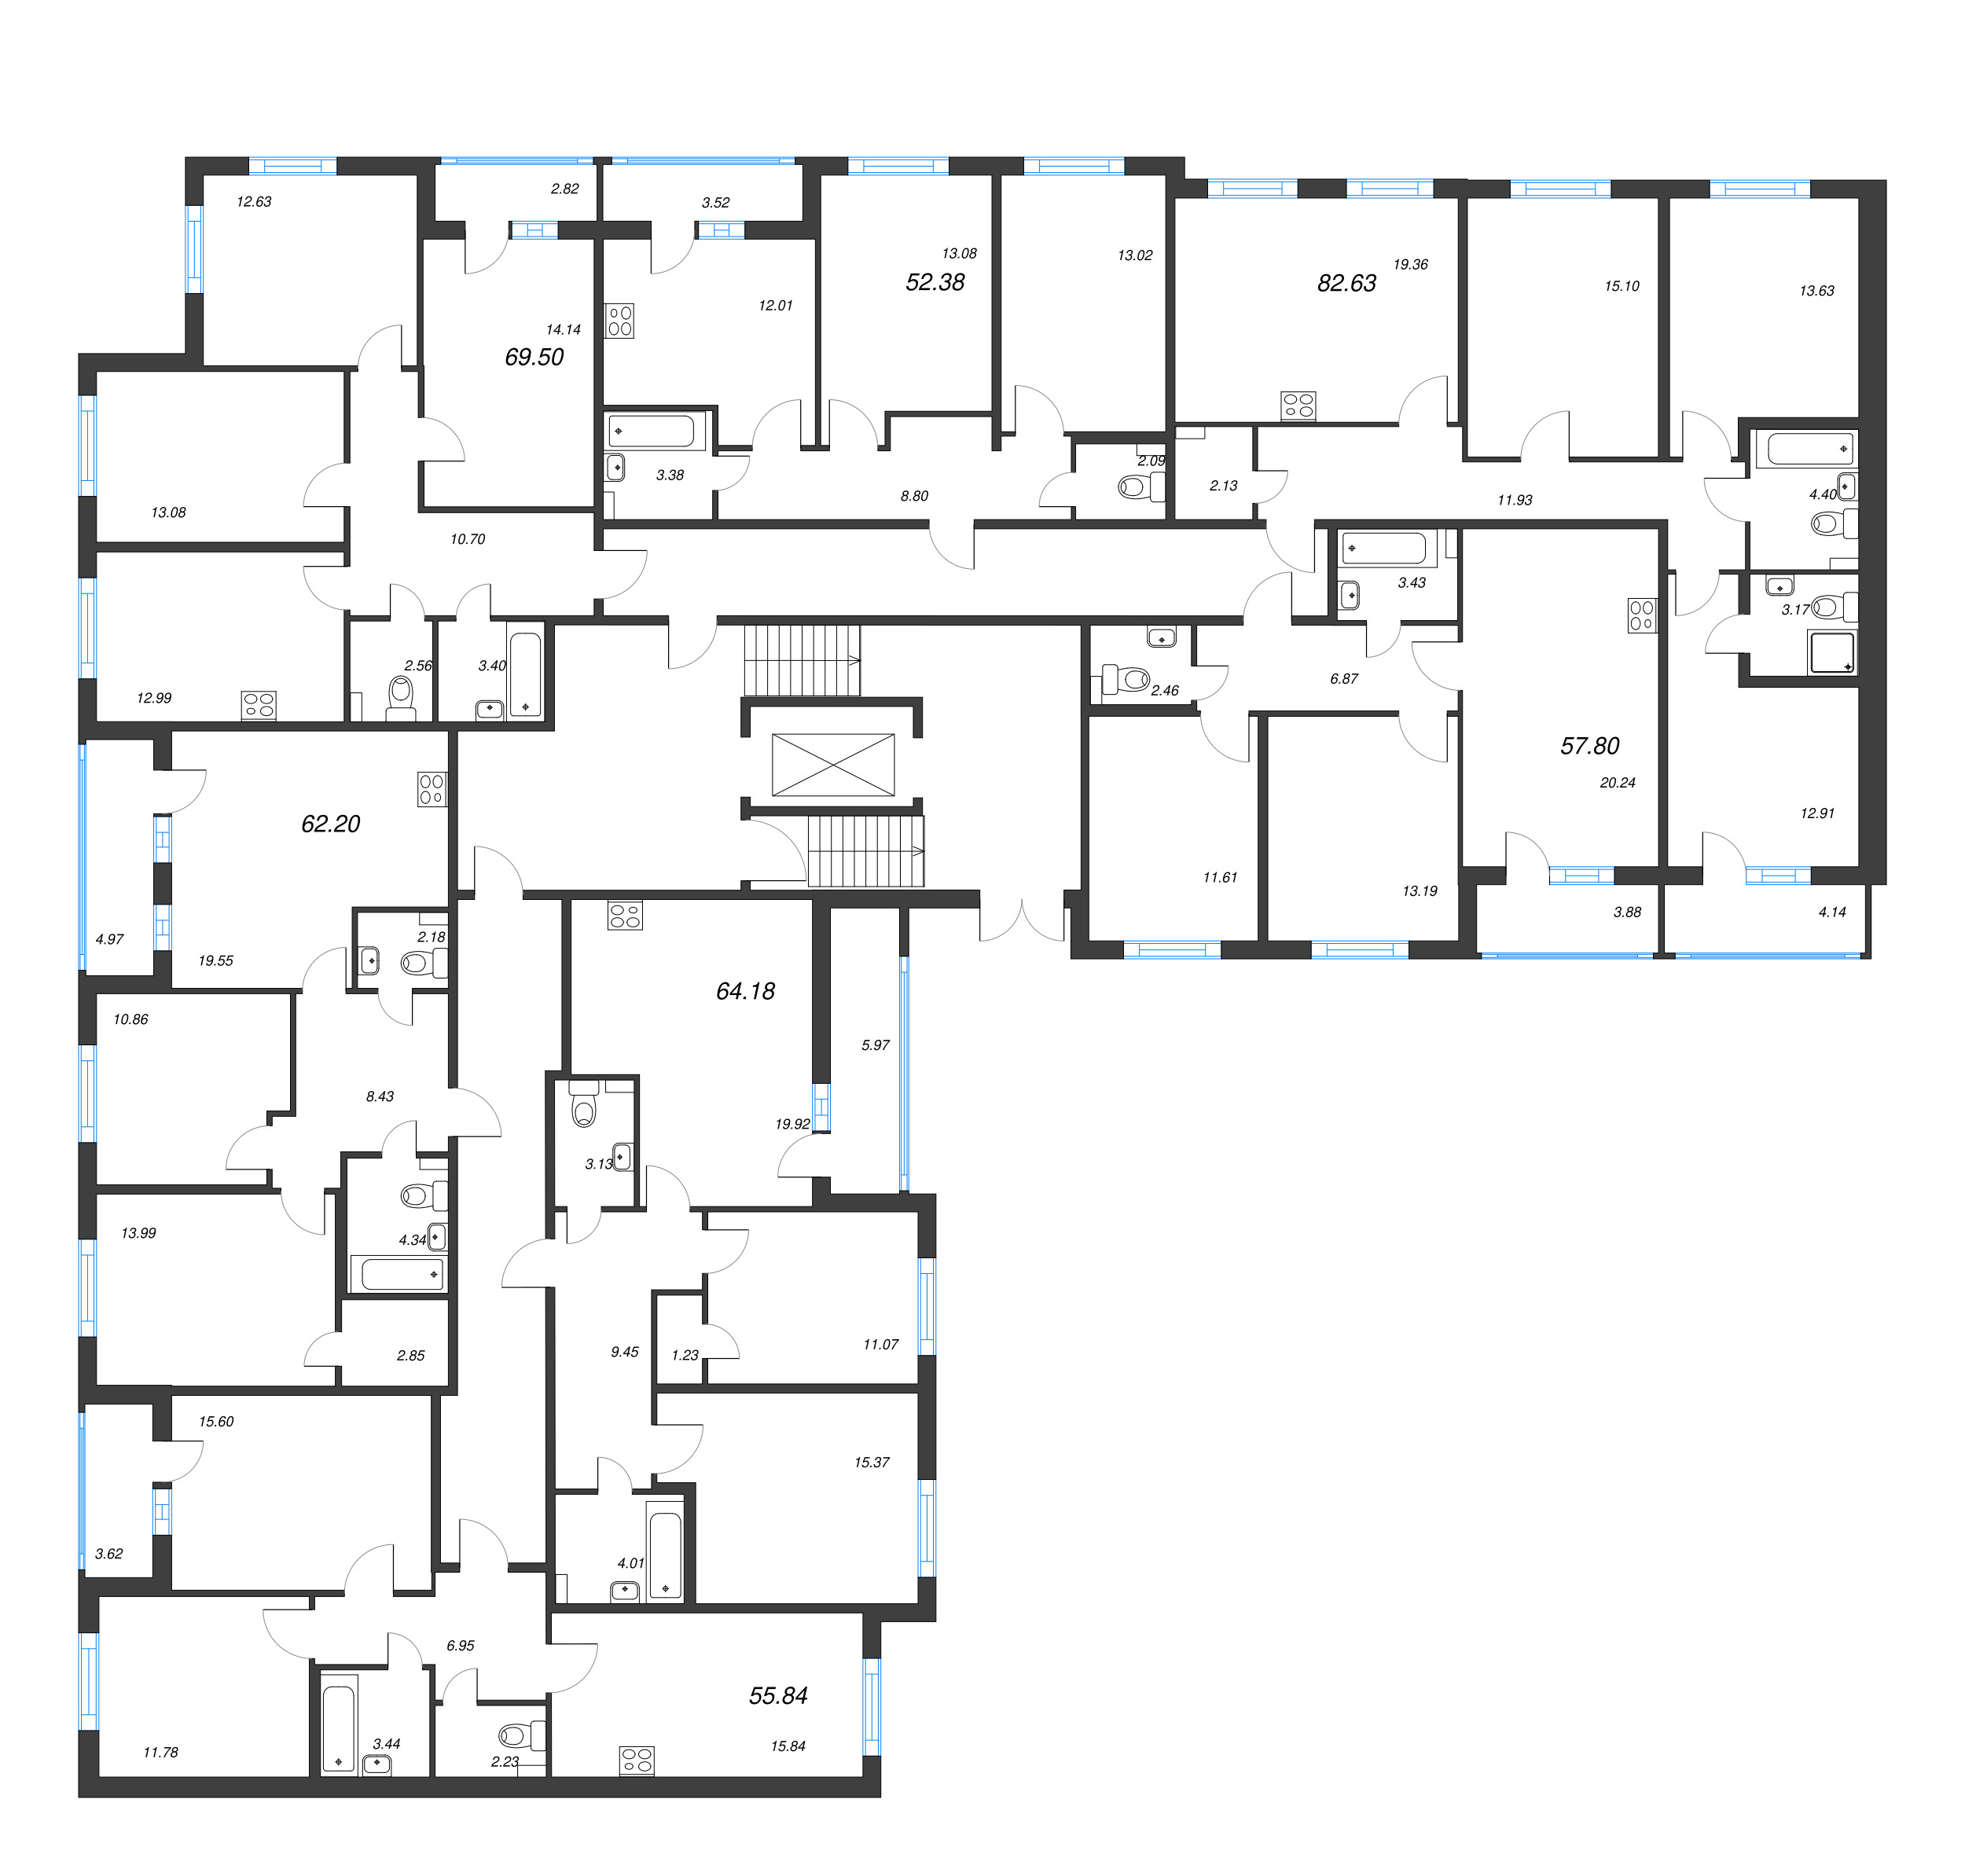 3-комнатная (Евро) квартира, 64.18 м² - планировка этажа